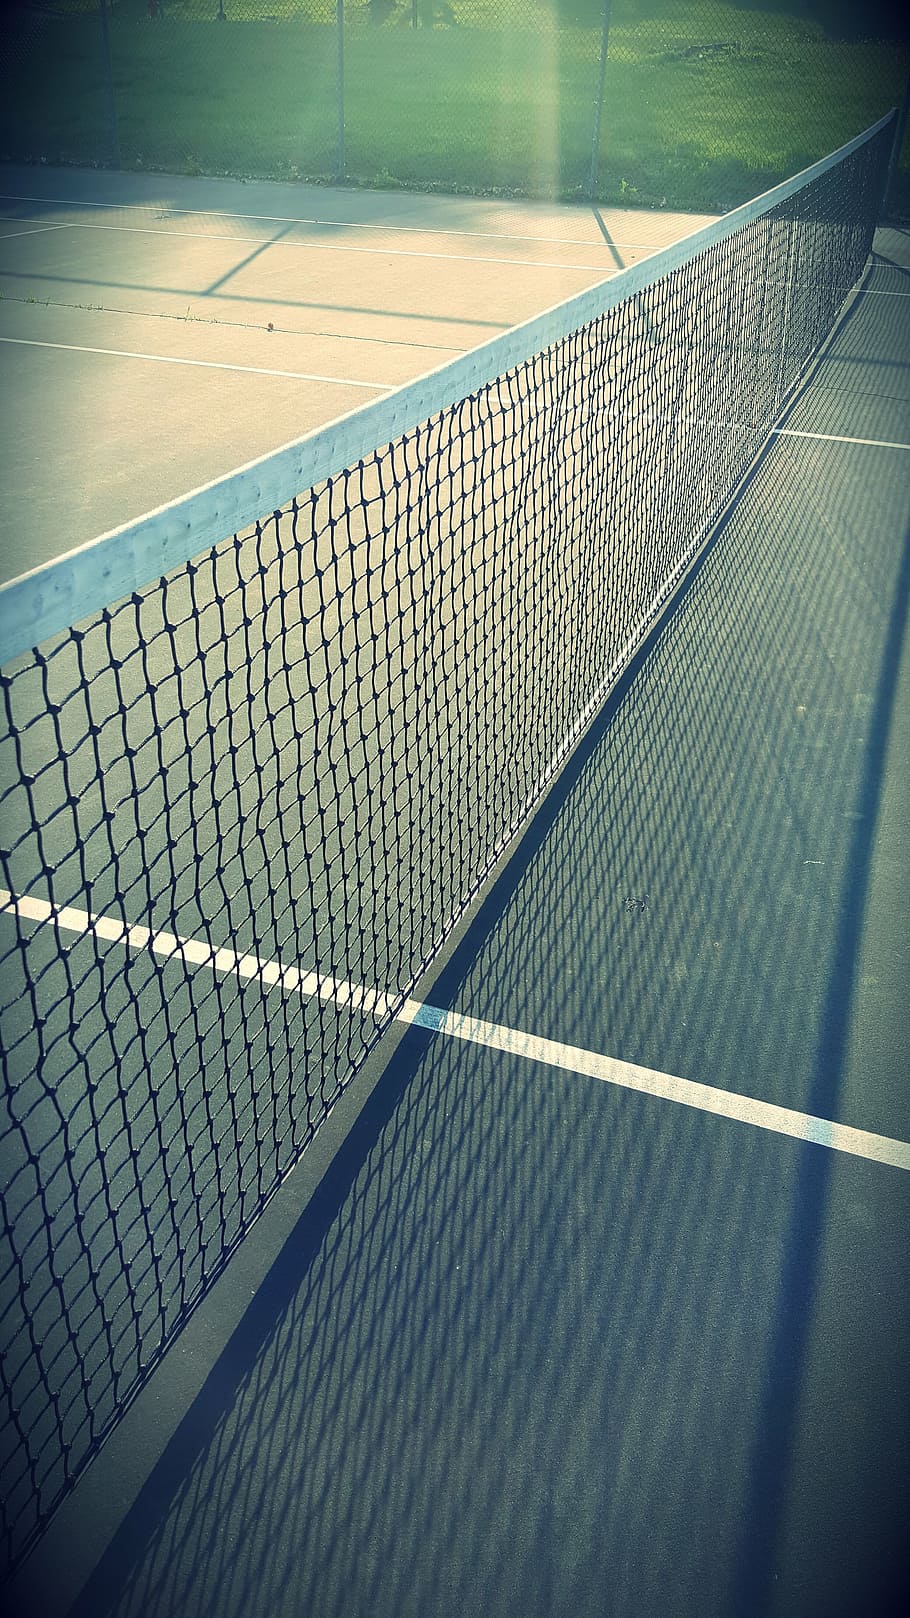 selective, focus photography, white, tennis, net, court, sport, tennis court, tennis net, net - sports equipment